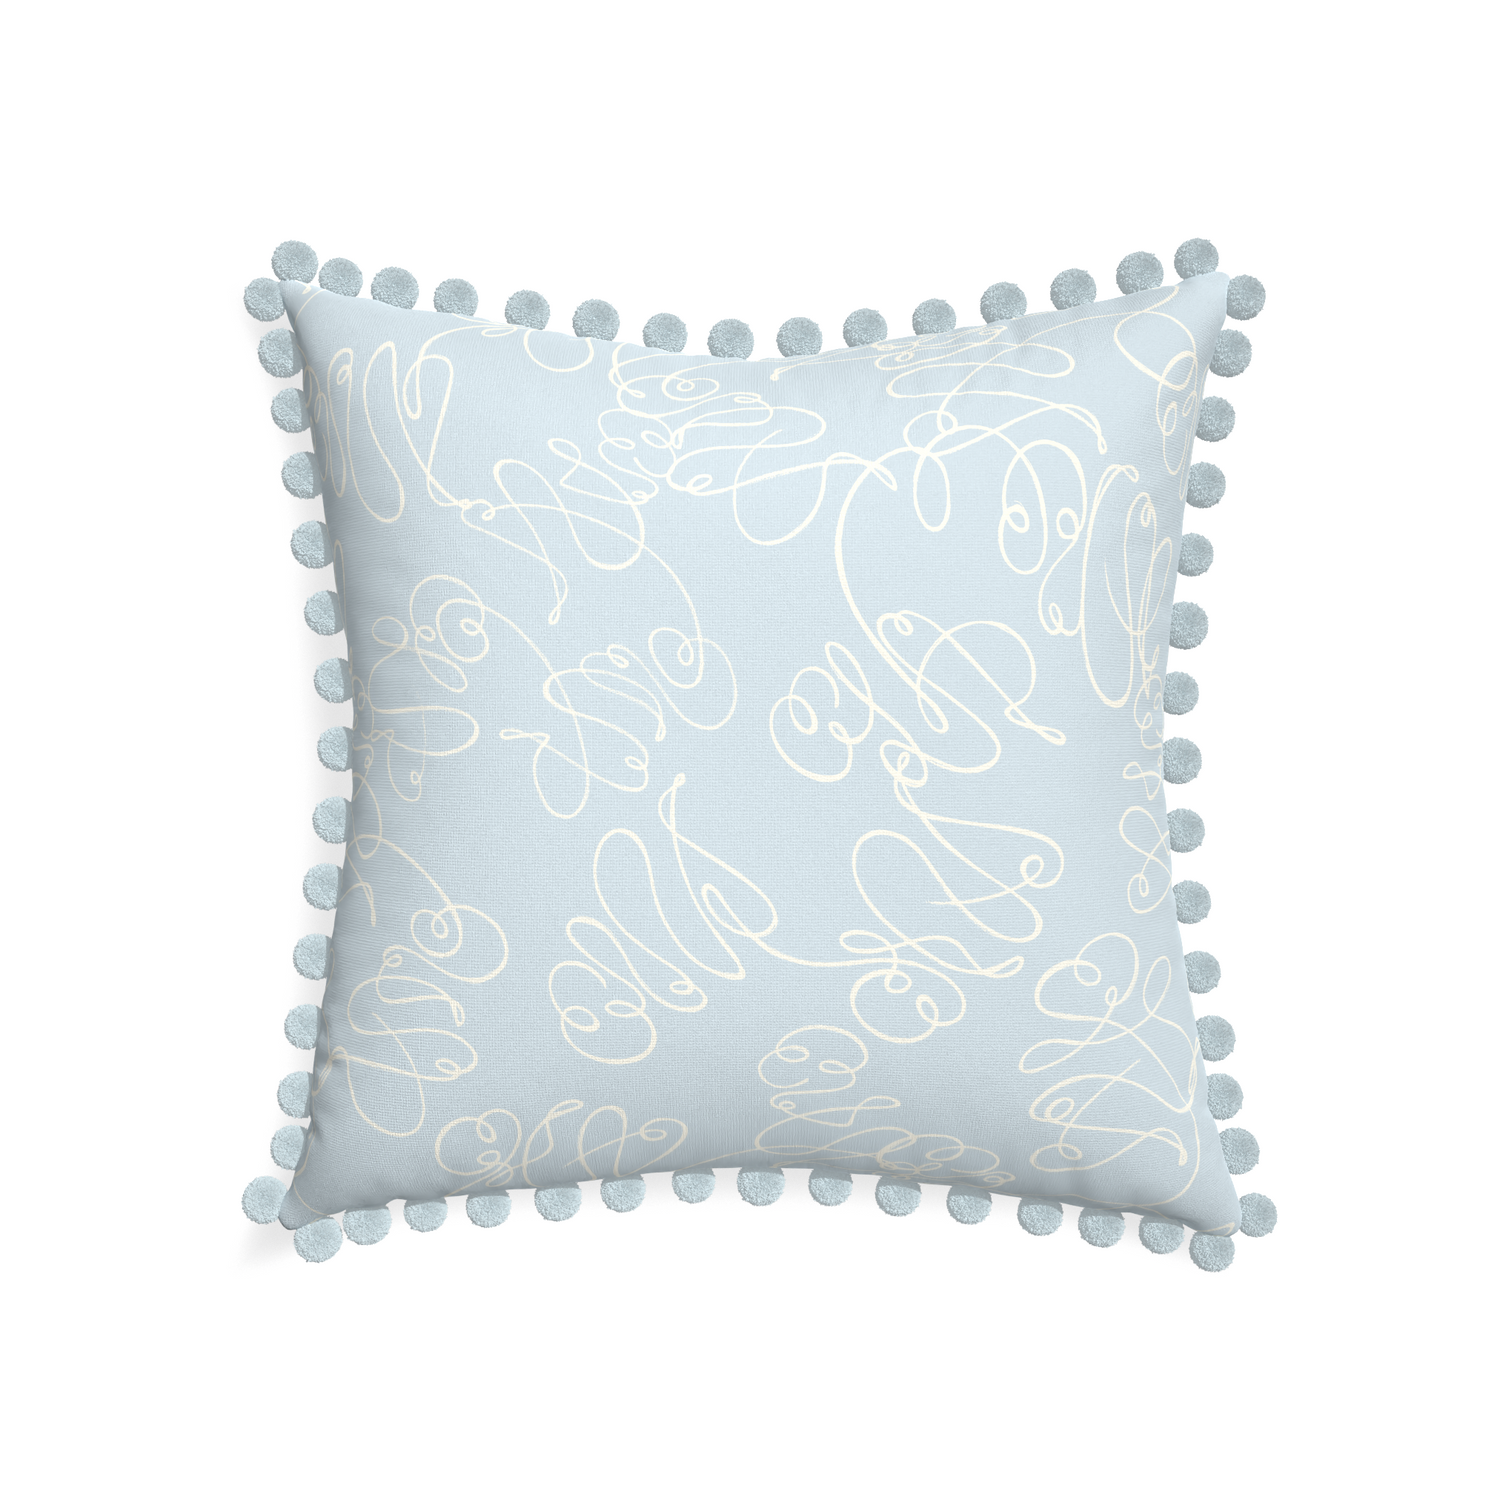 22-square mirabella custom pillow with powder pom pom on white background